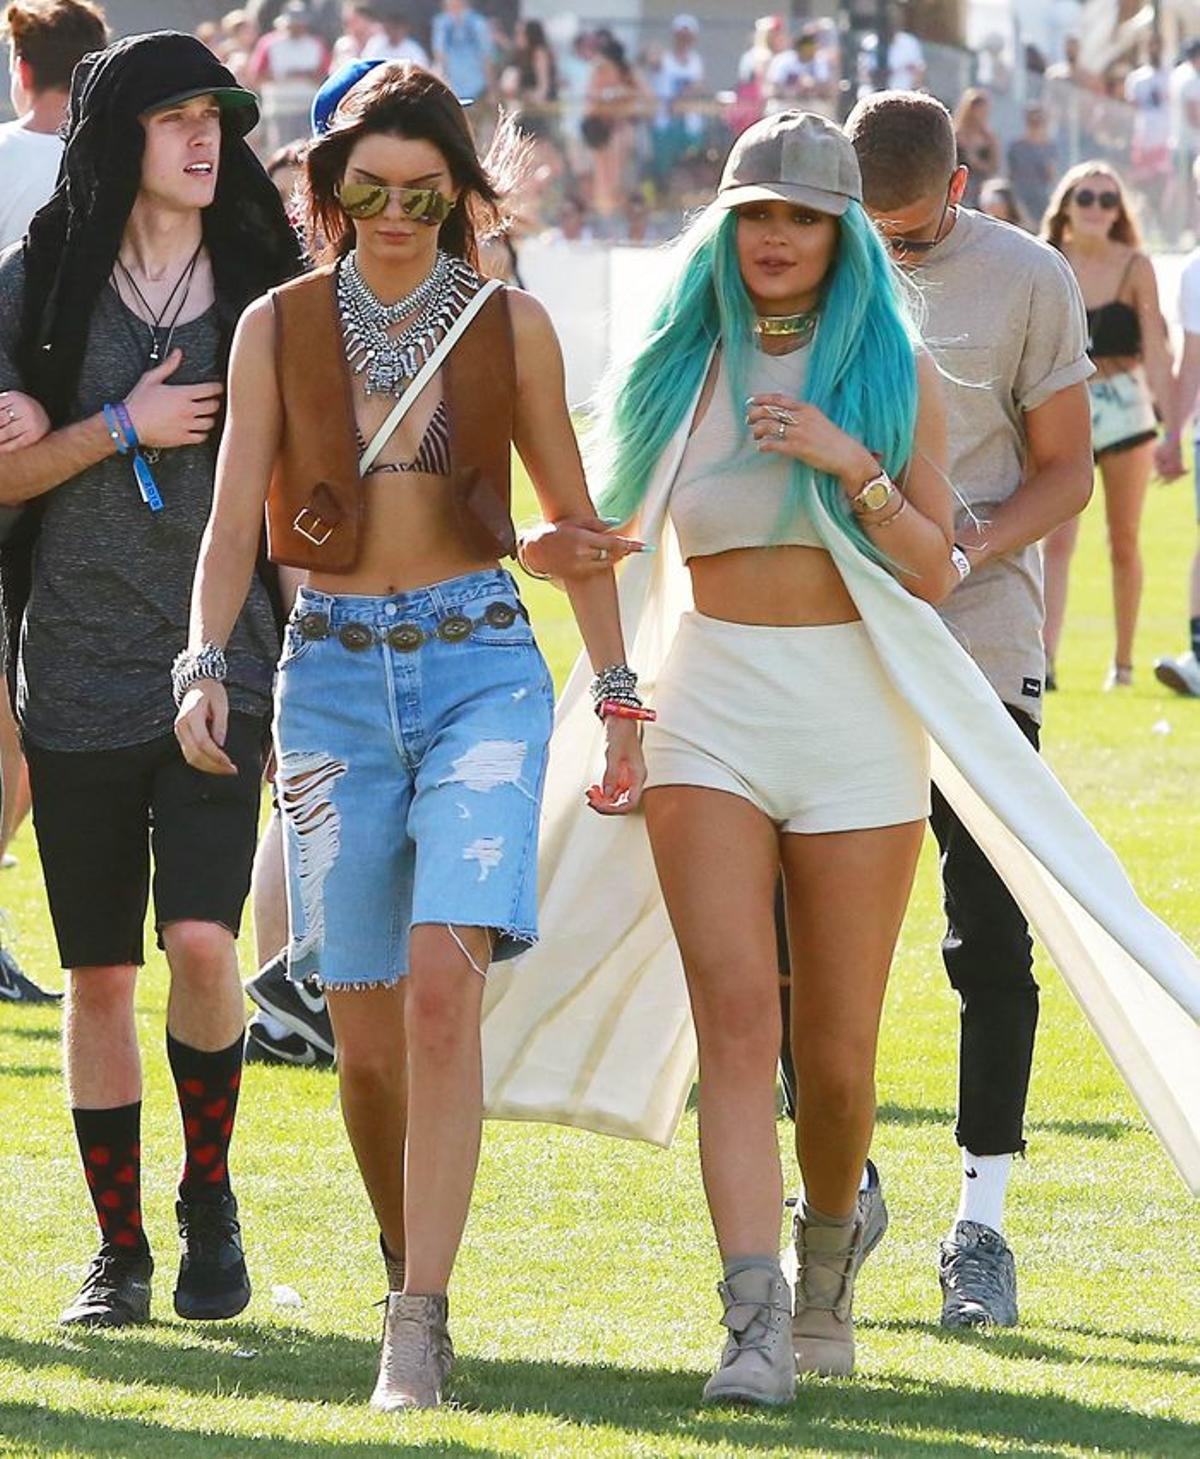 Hermanísimas en Coachella 2015, Kylie y Kendall Jenner